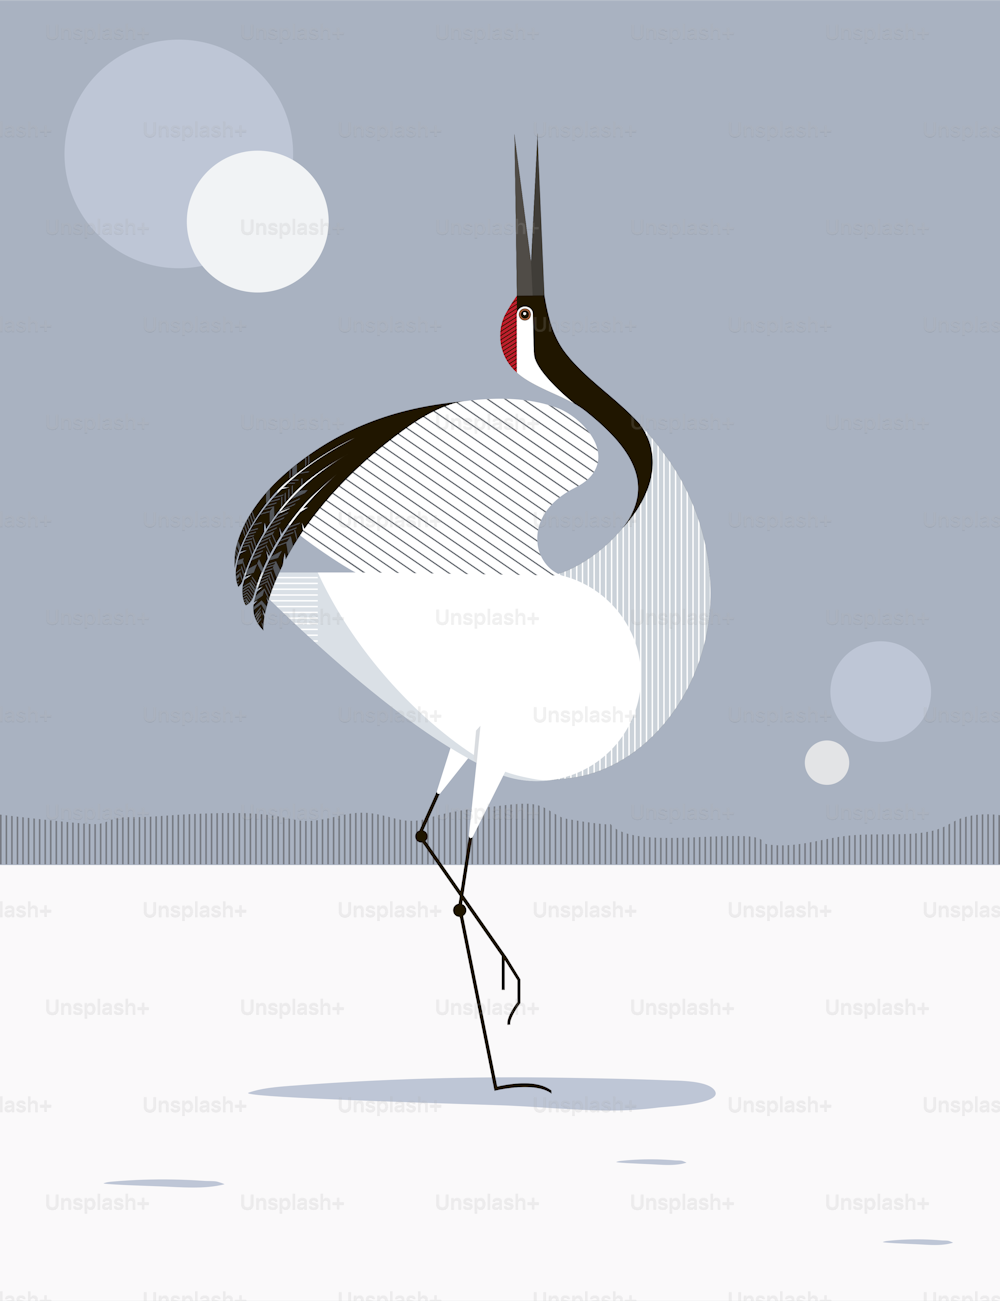 Graceful Japanese Crane dancing mating dance, Love Dance, minimalistic image